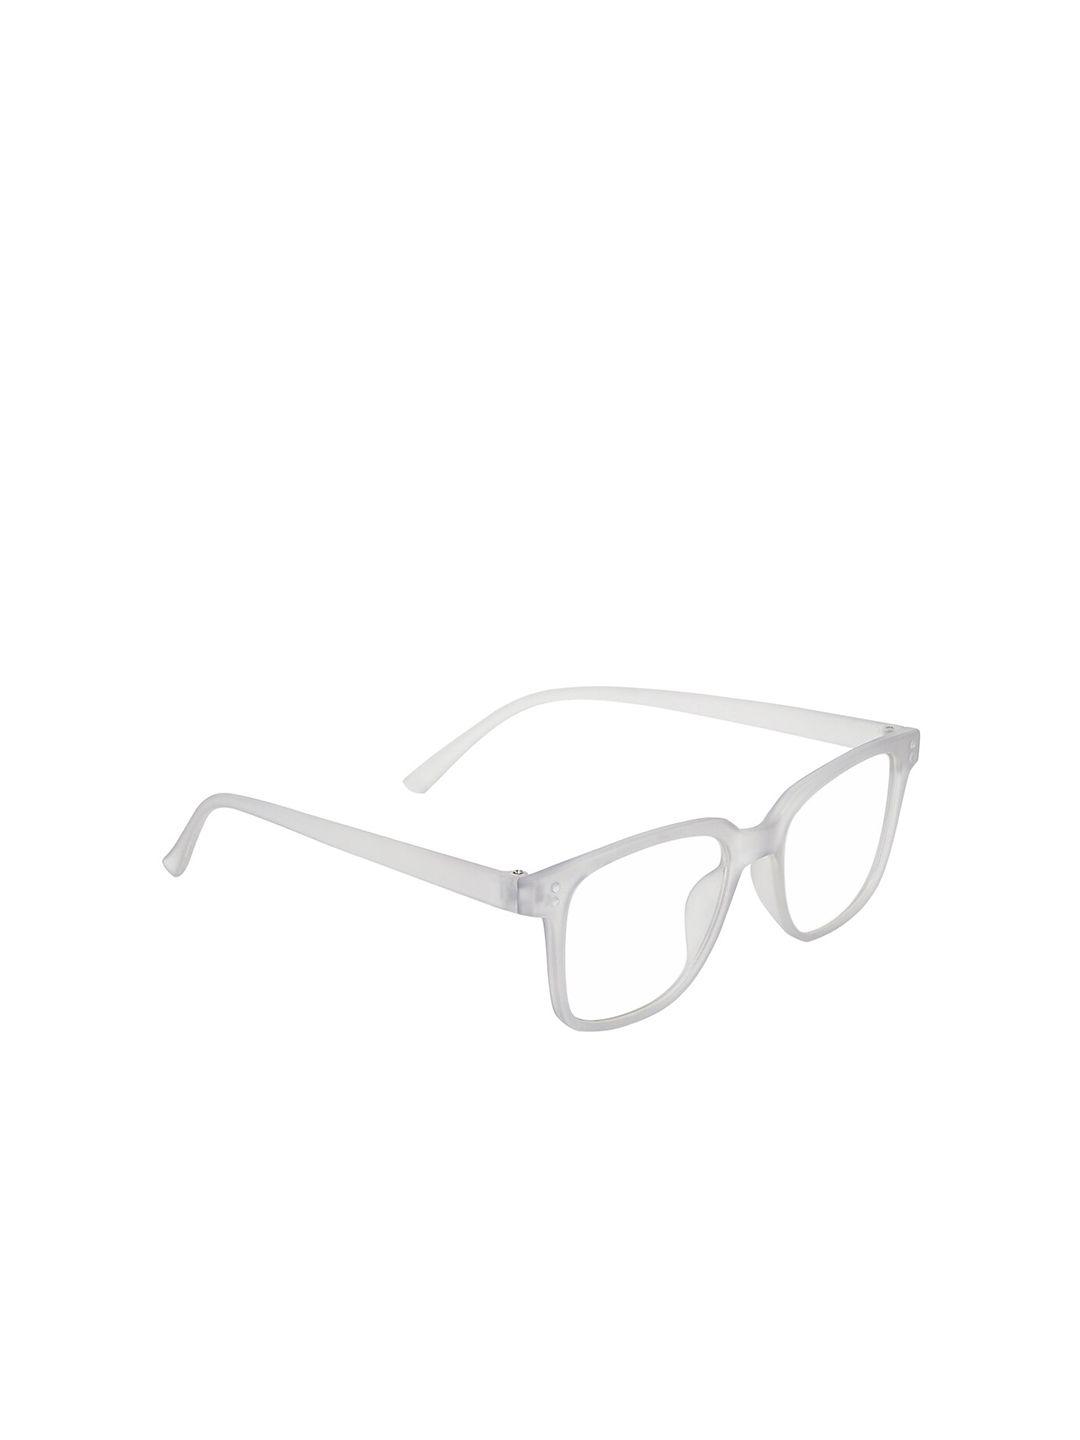 garth unisex wayfarer sunglasses with uv protected lens